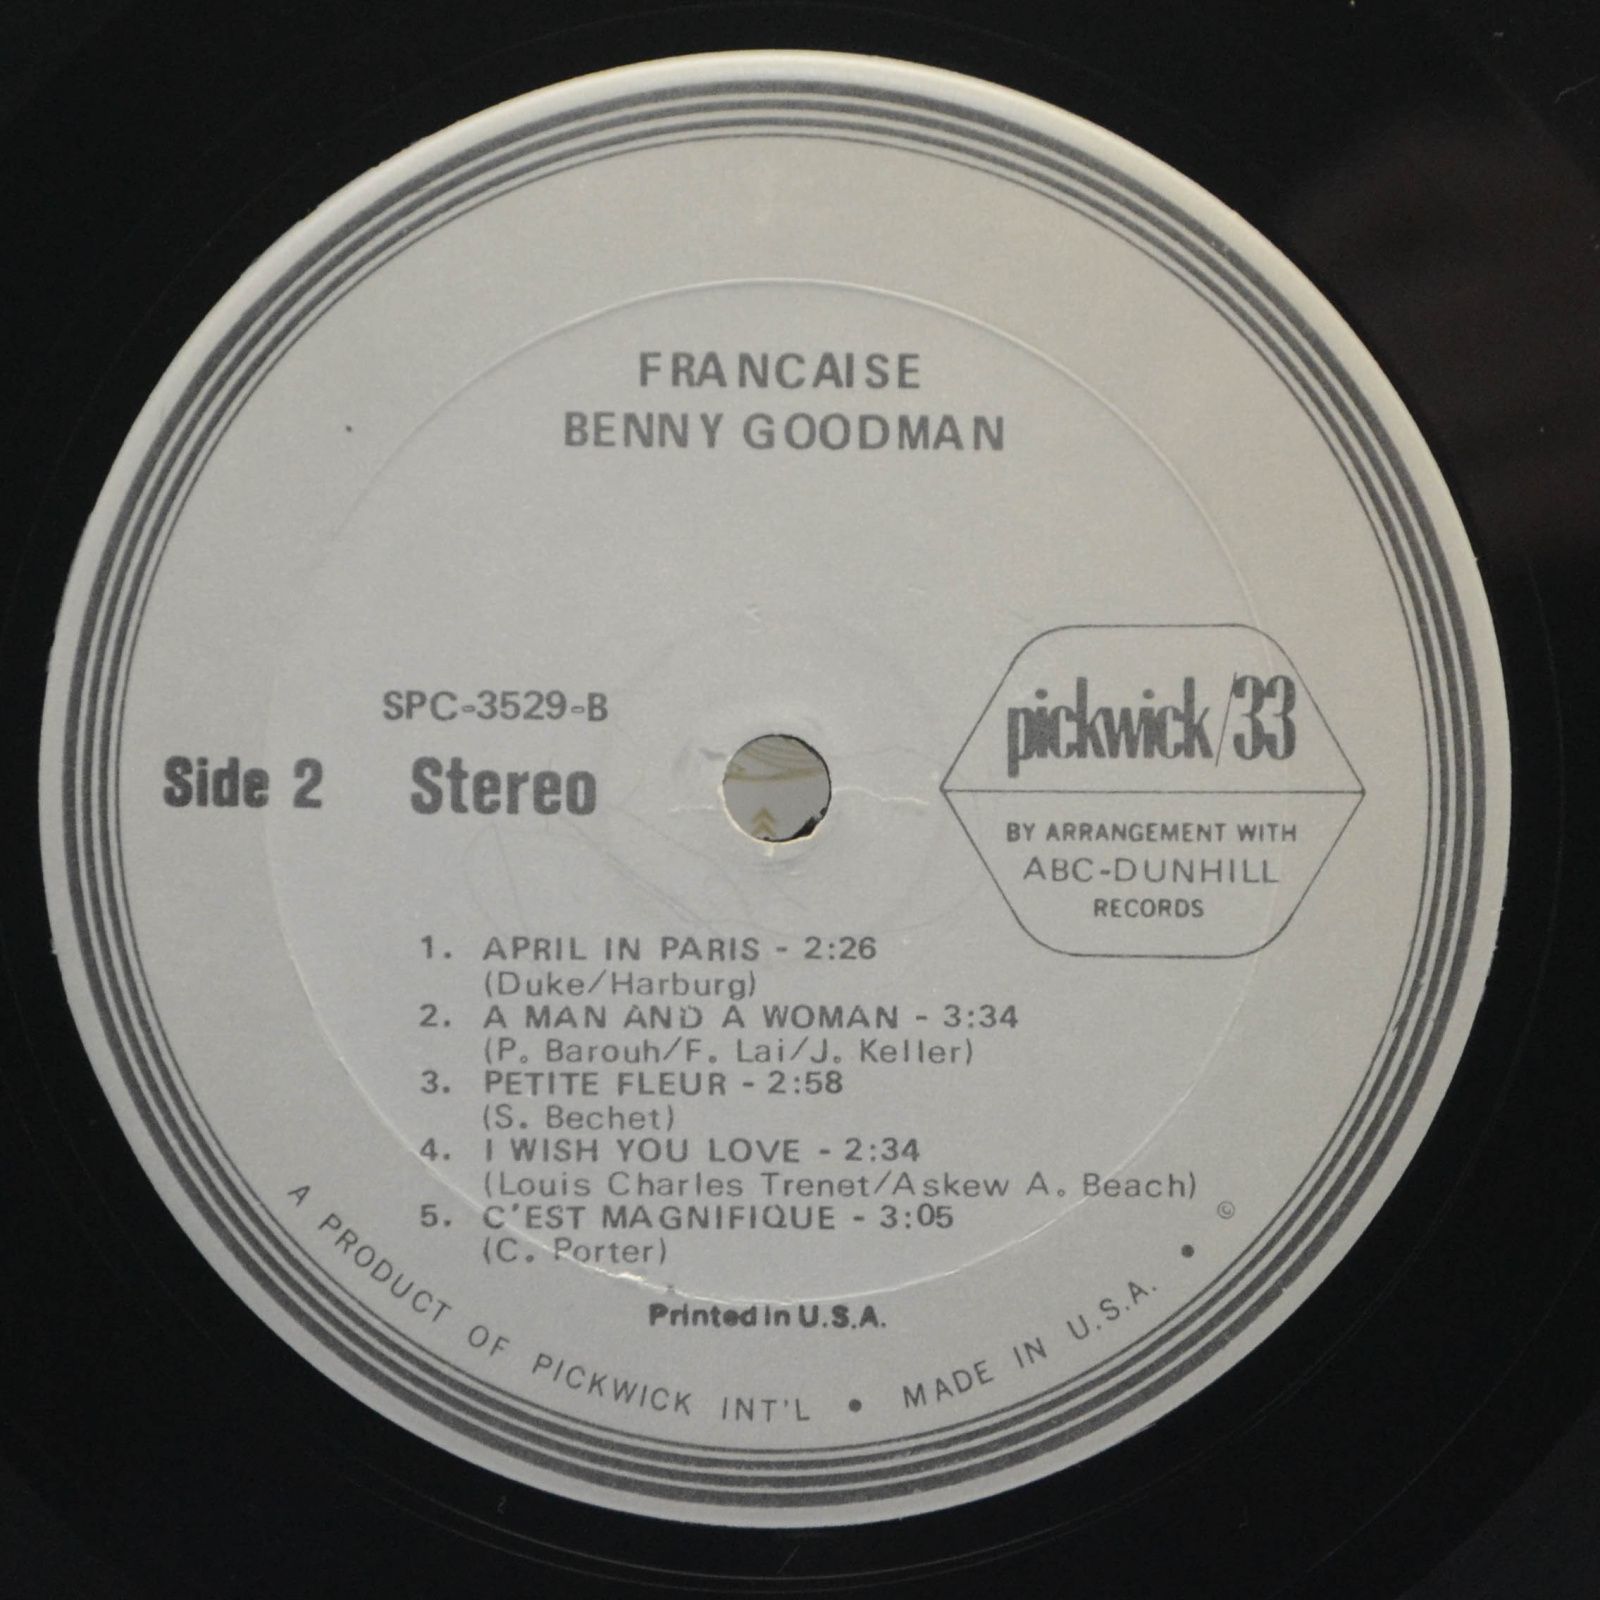 Benny Goodman — Francaise (USA), 1975